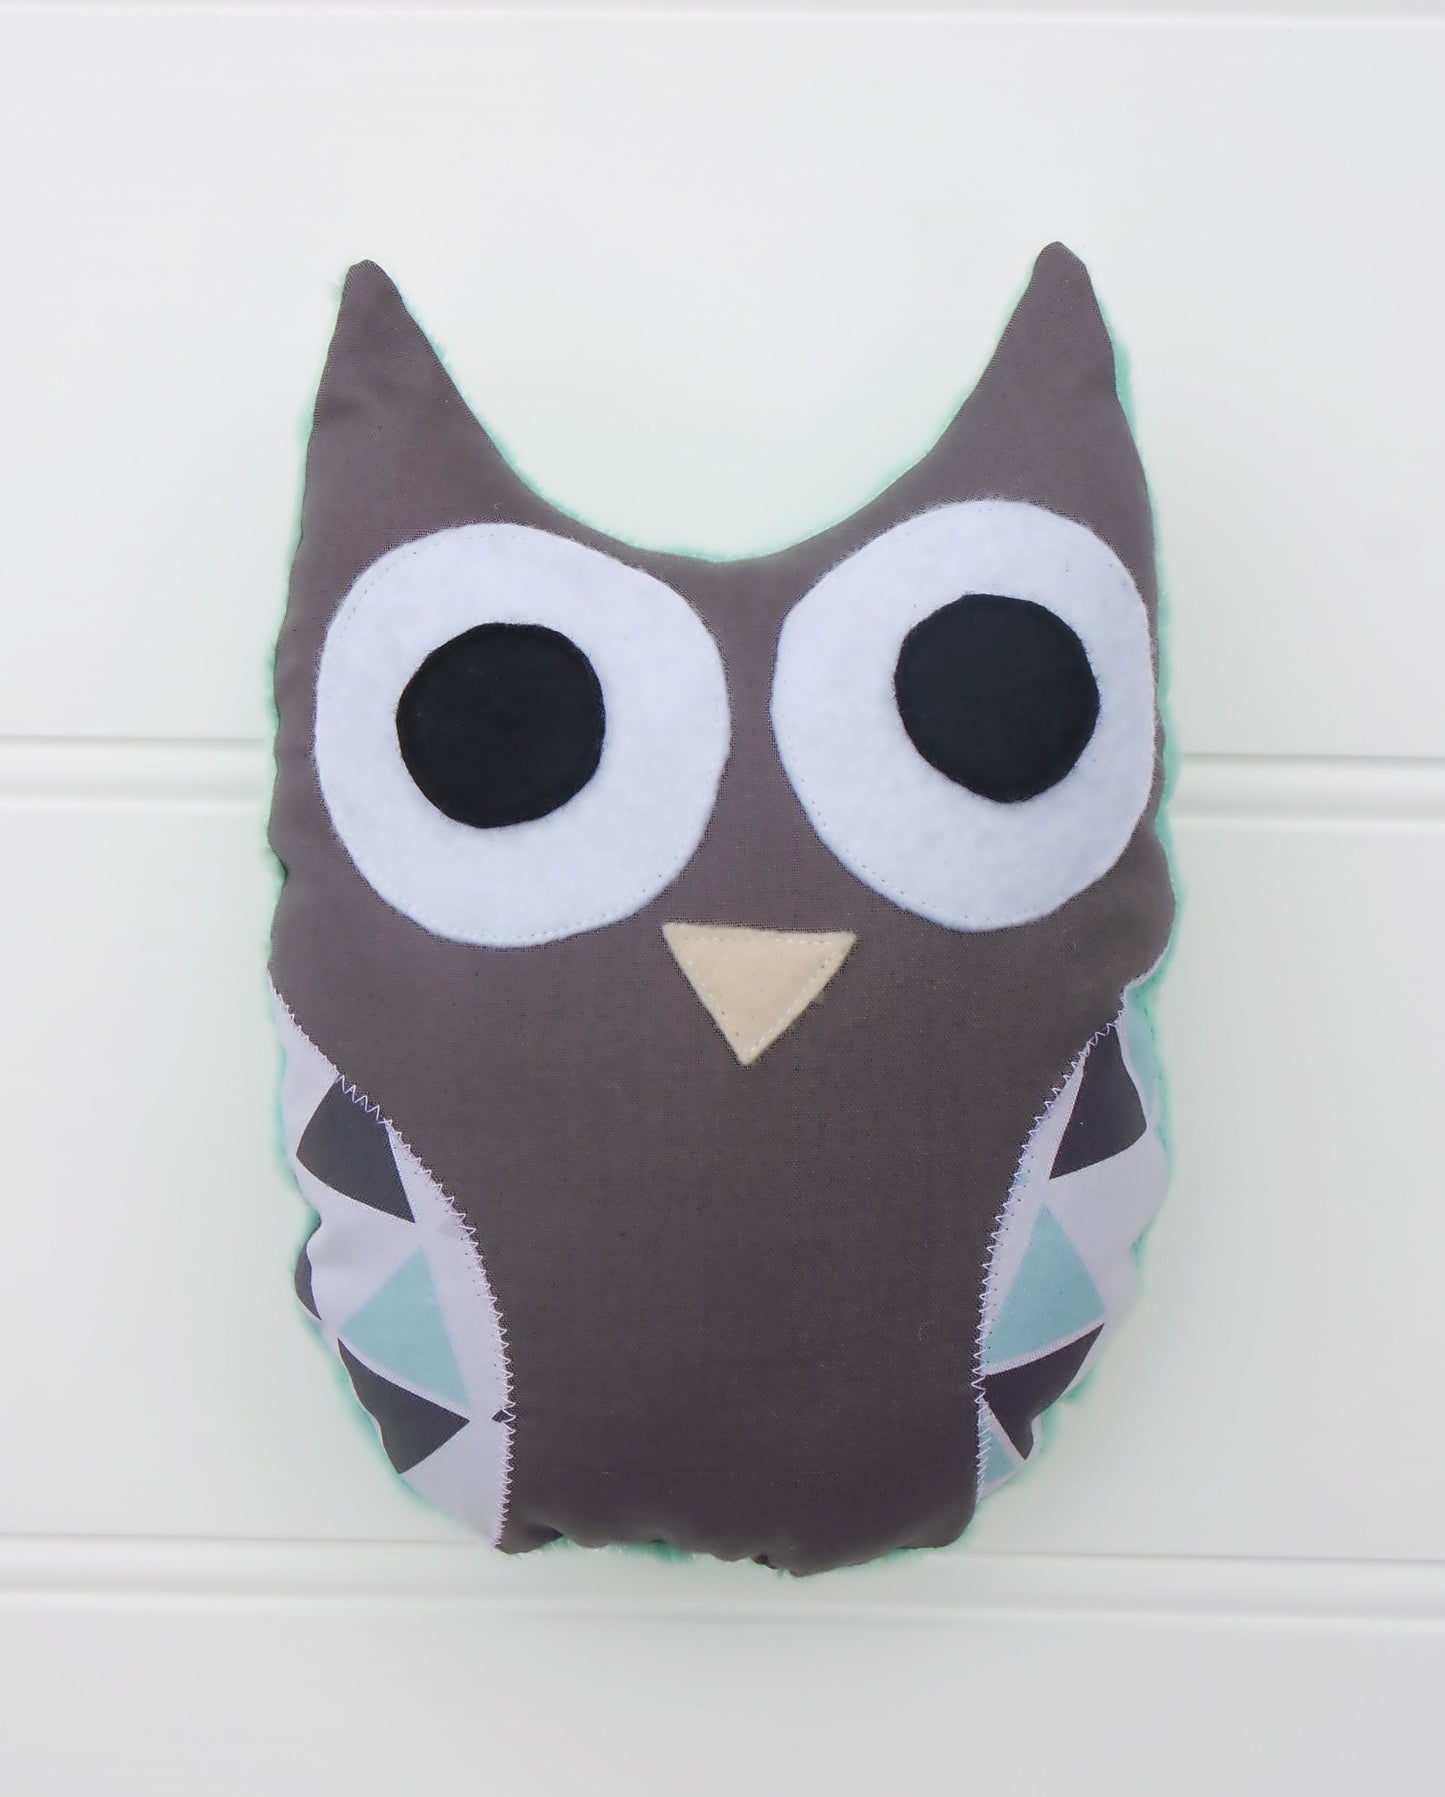 Aqua Owl Plush Toy